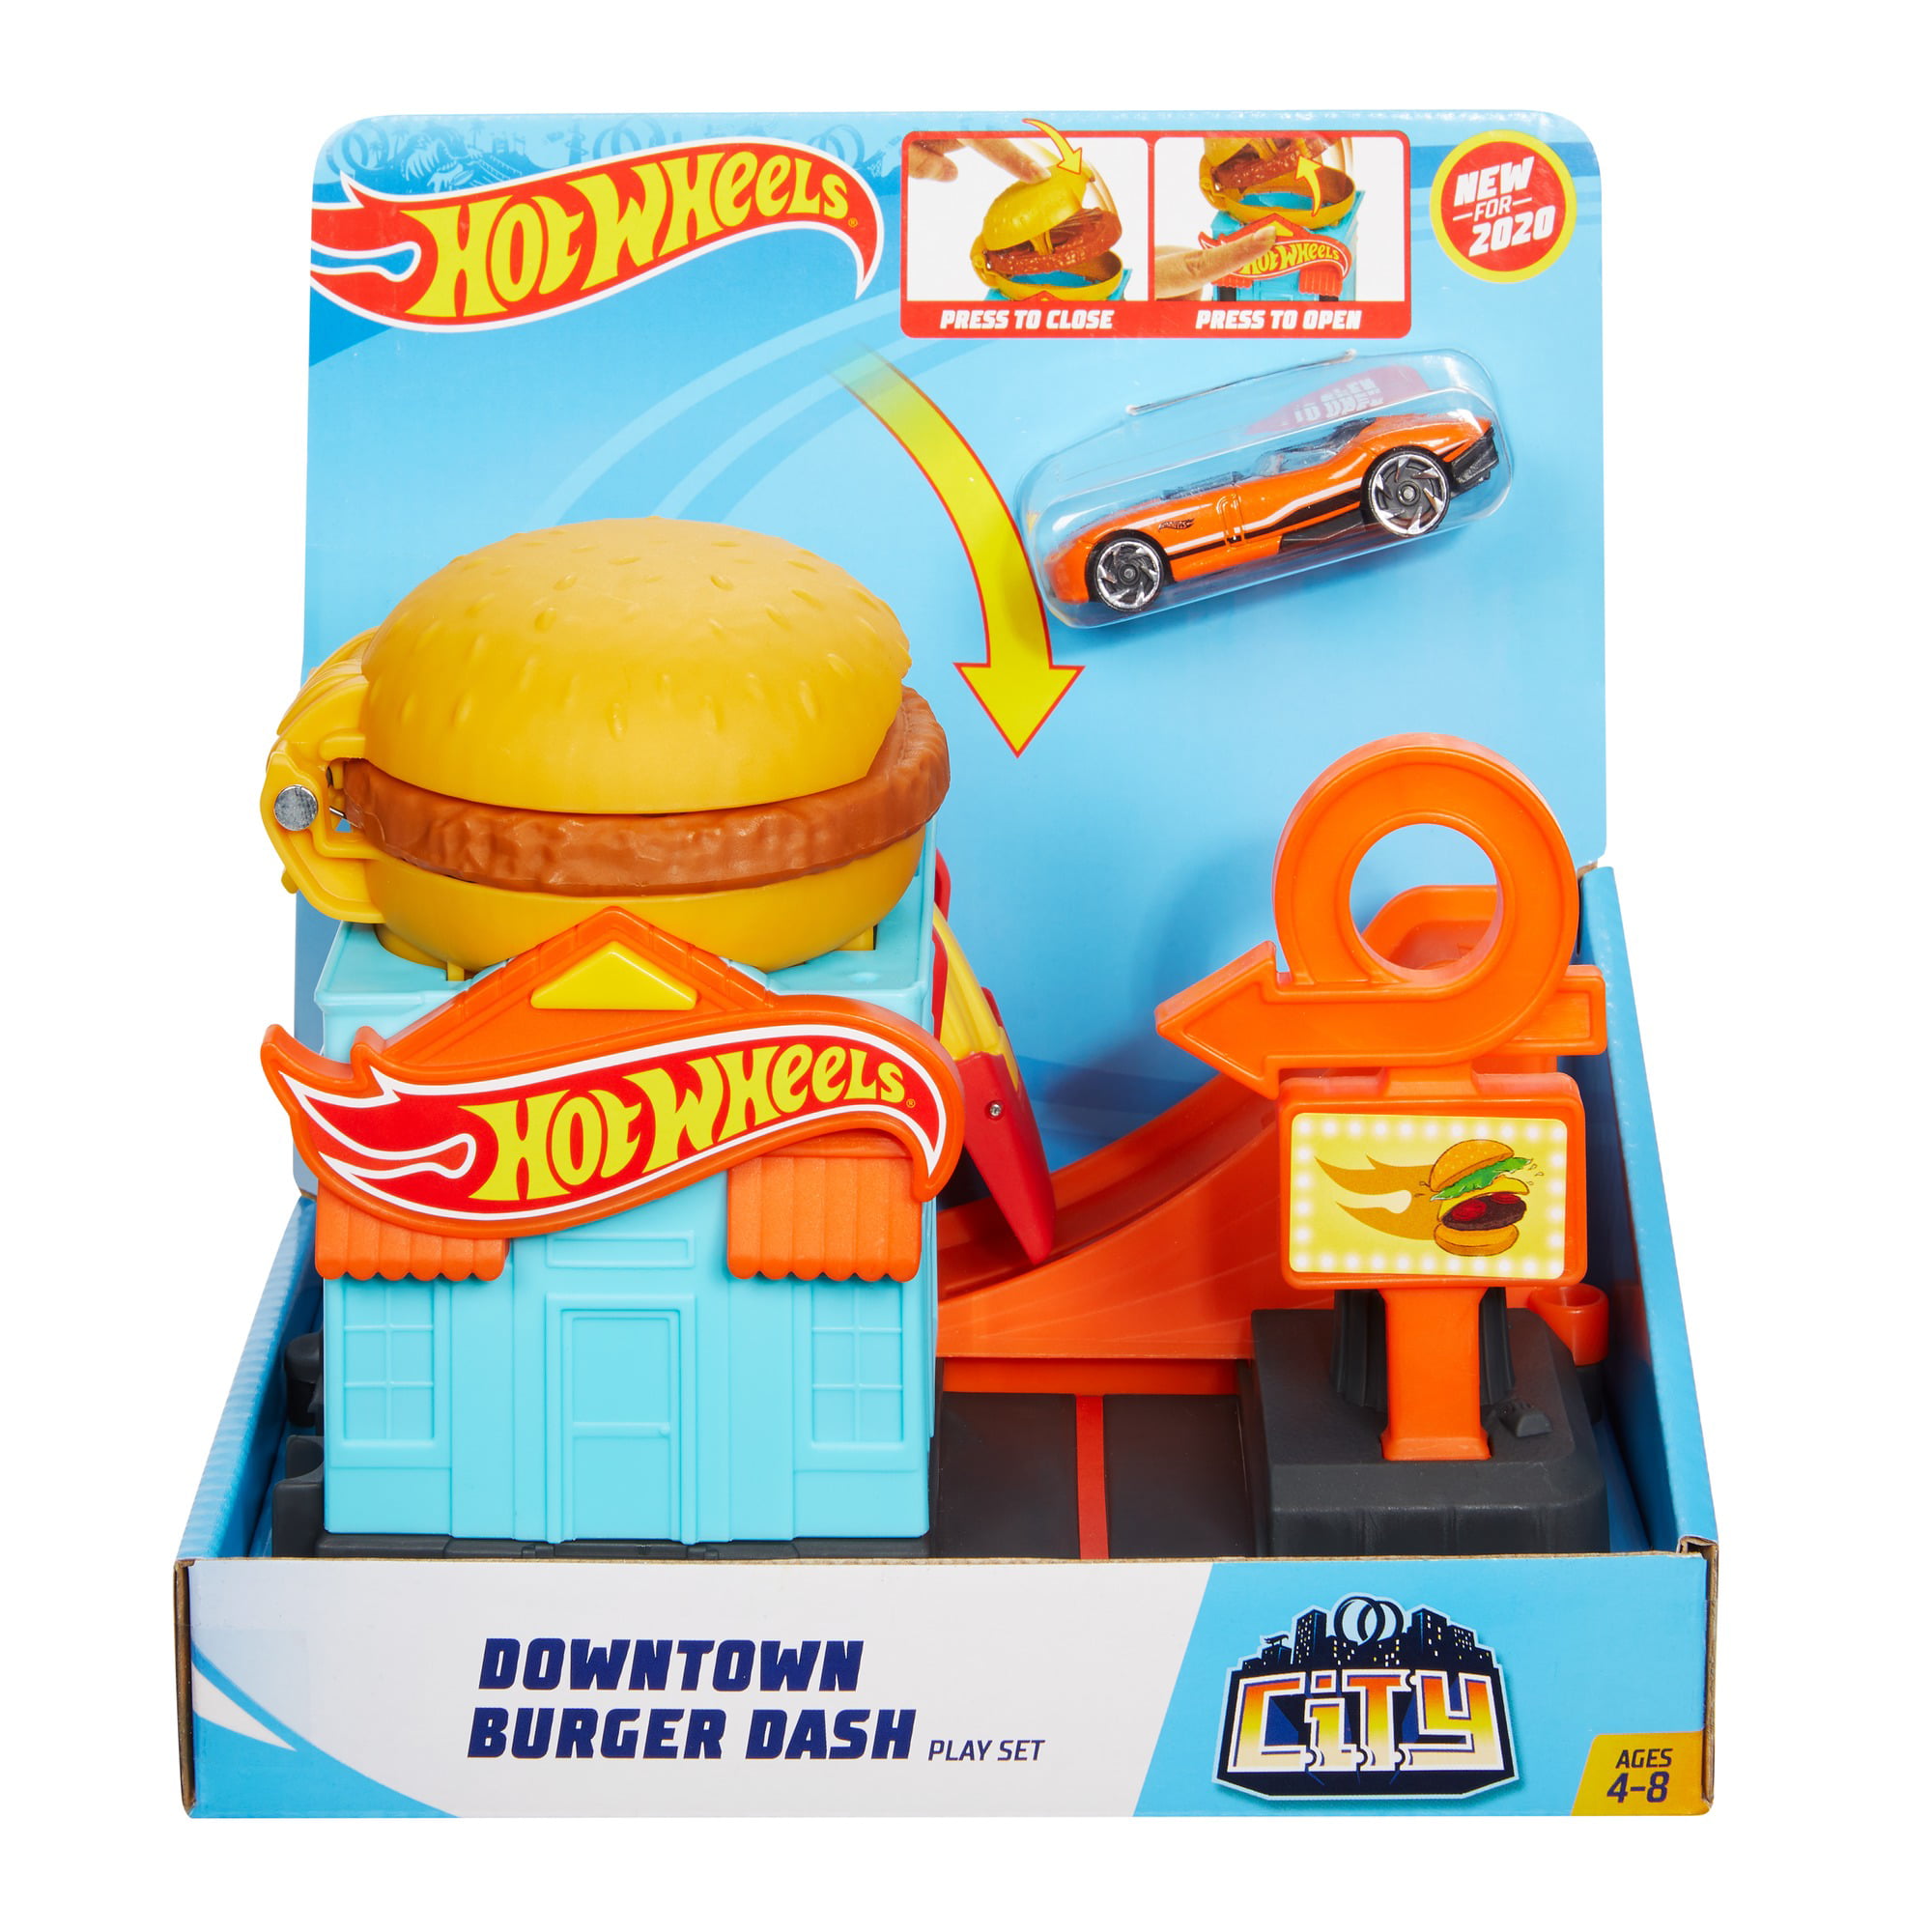 Mattel Hot Wheels City Downtown Playset Burger Dash